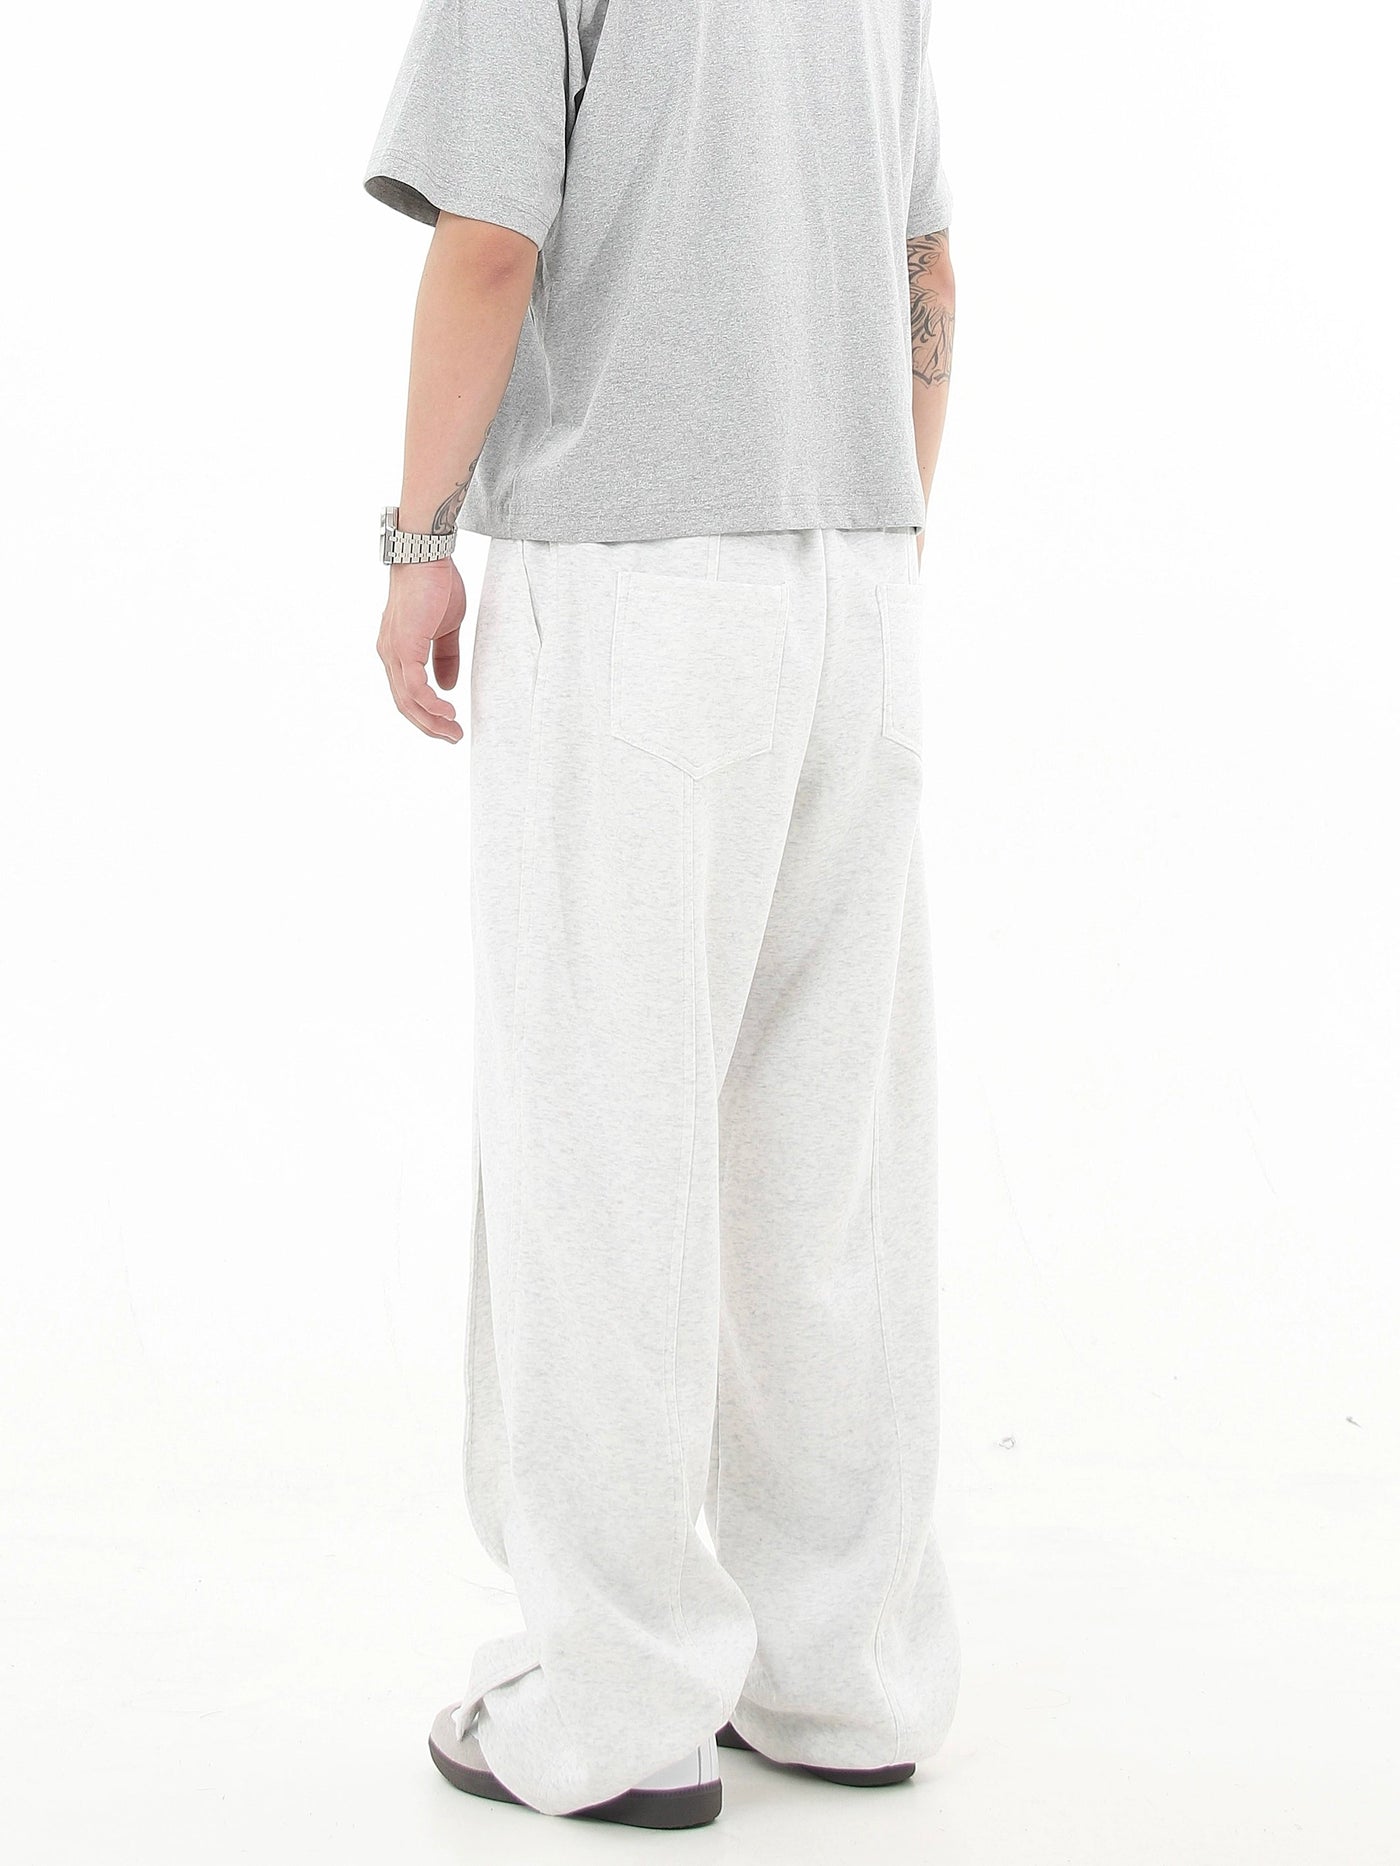 Spliced Drawstring Sweatpants Korean Street Fashion Pants By Blacklists Shop Online at OH Vault